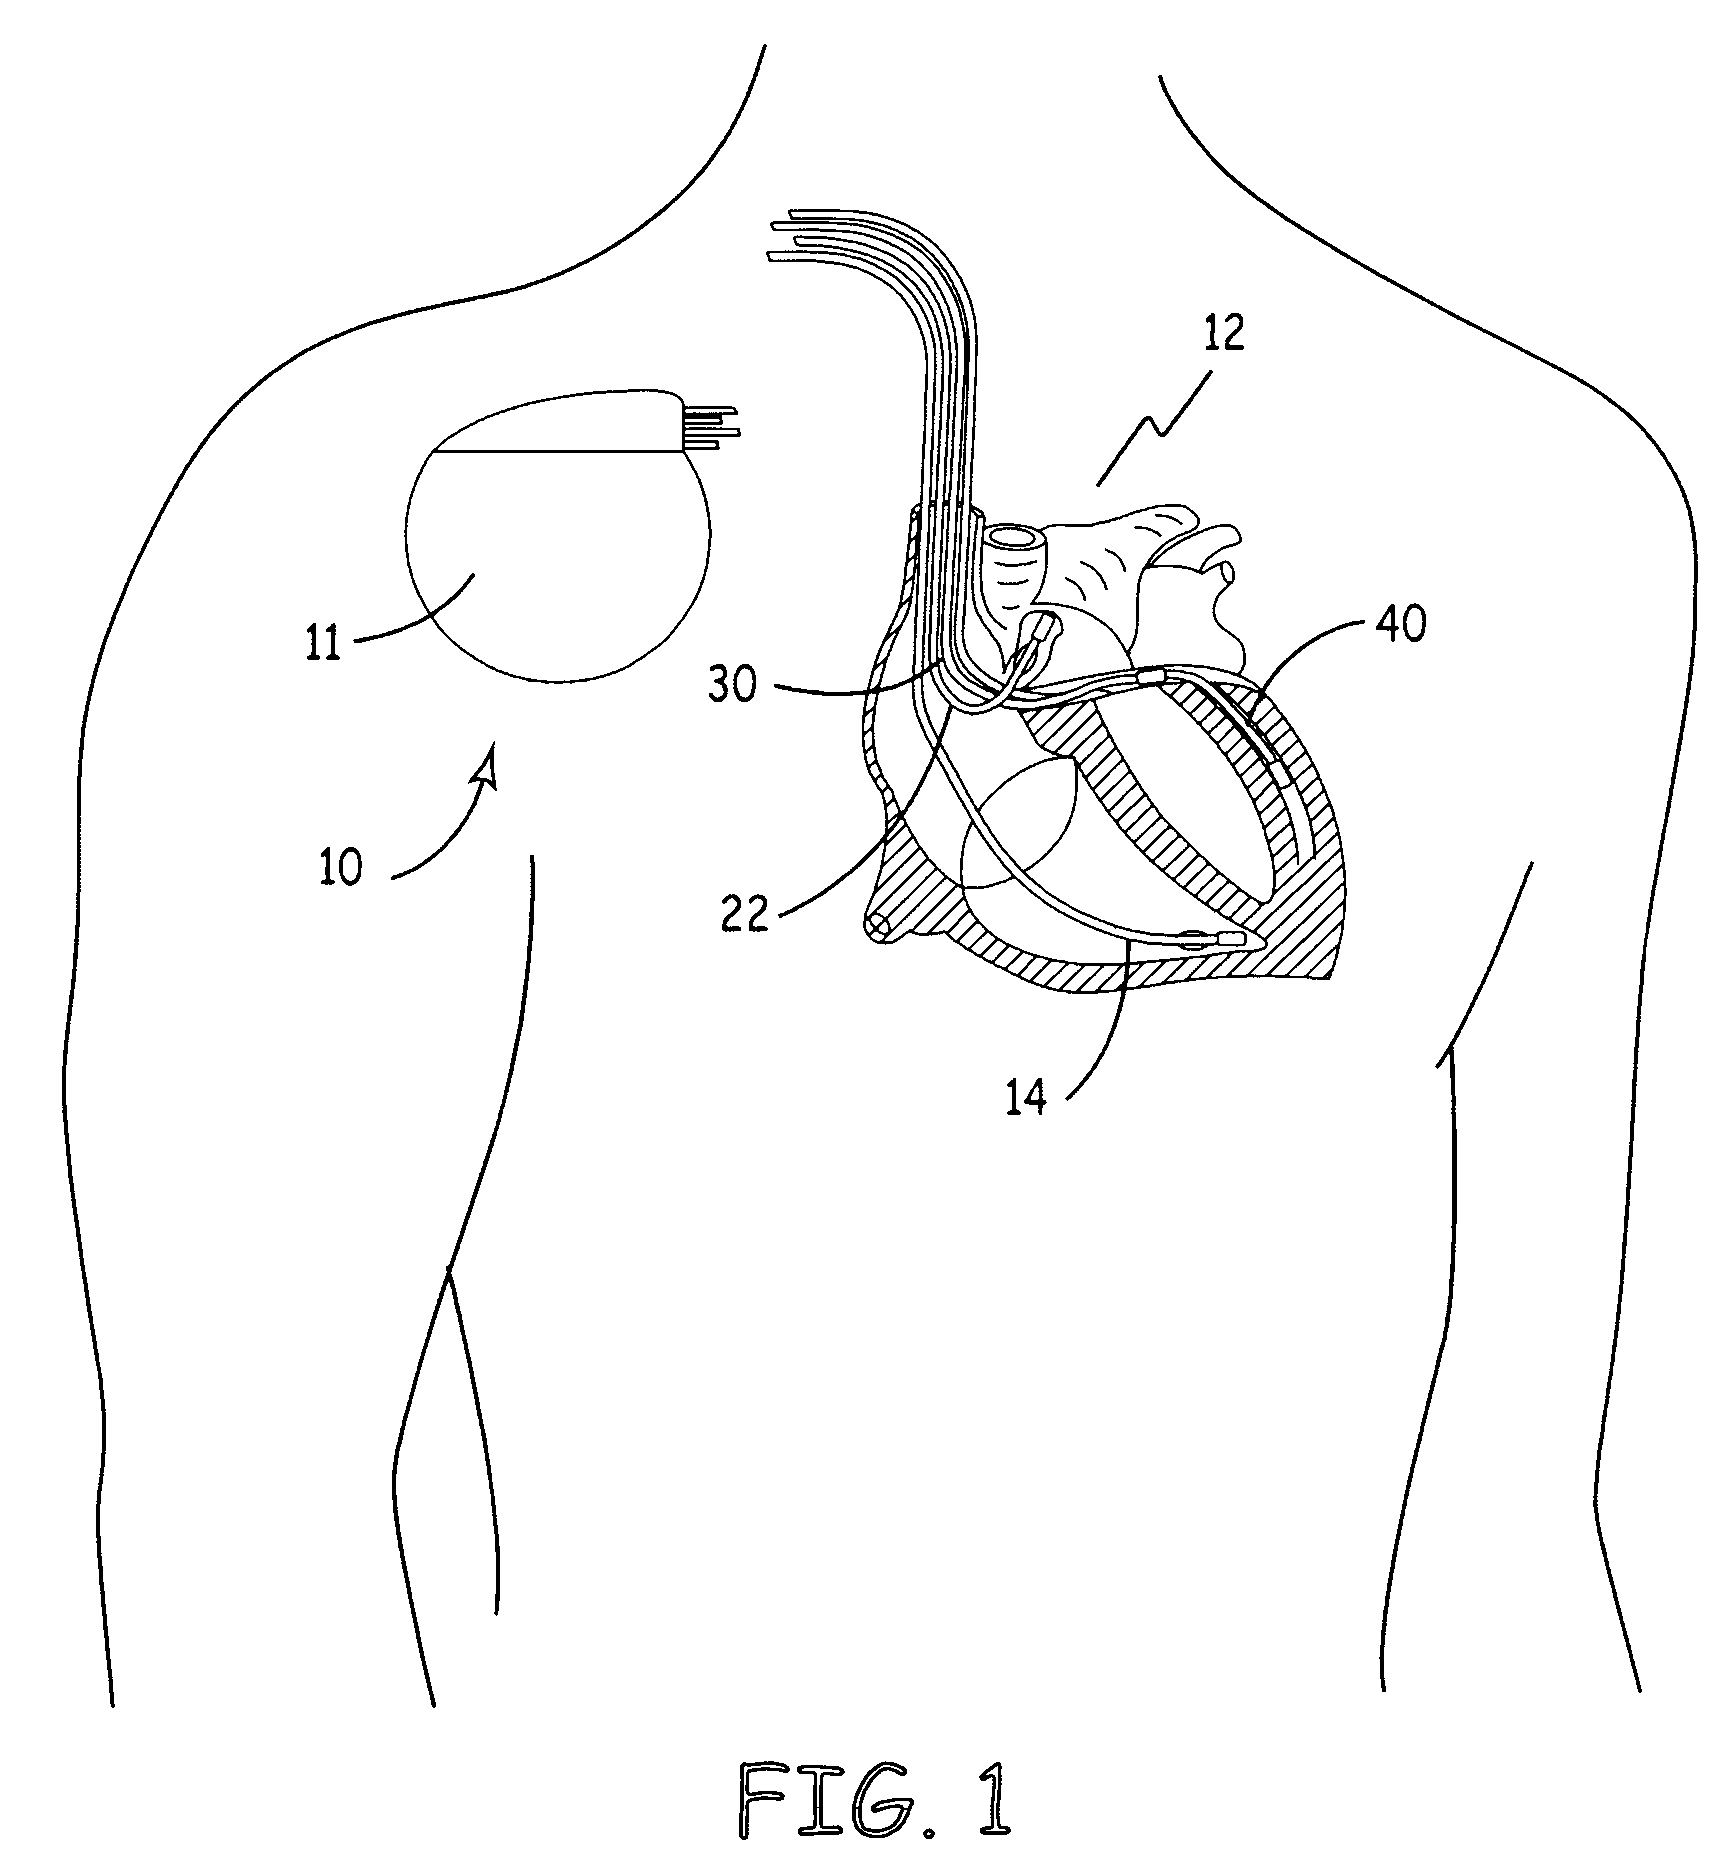 Trans-septal/trans-myocardial ventricular pacing lead